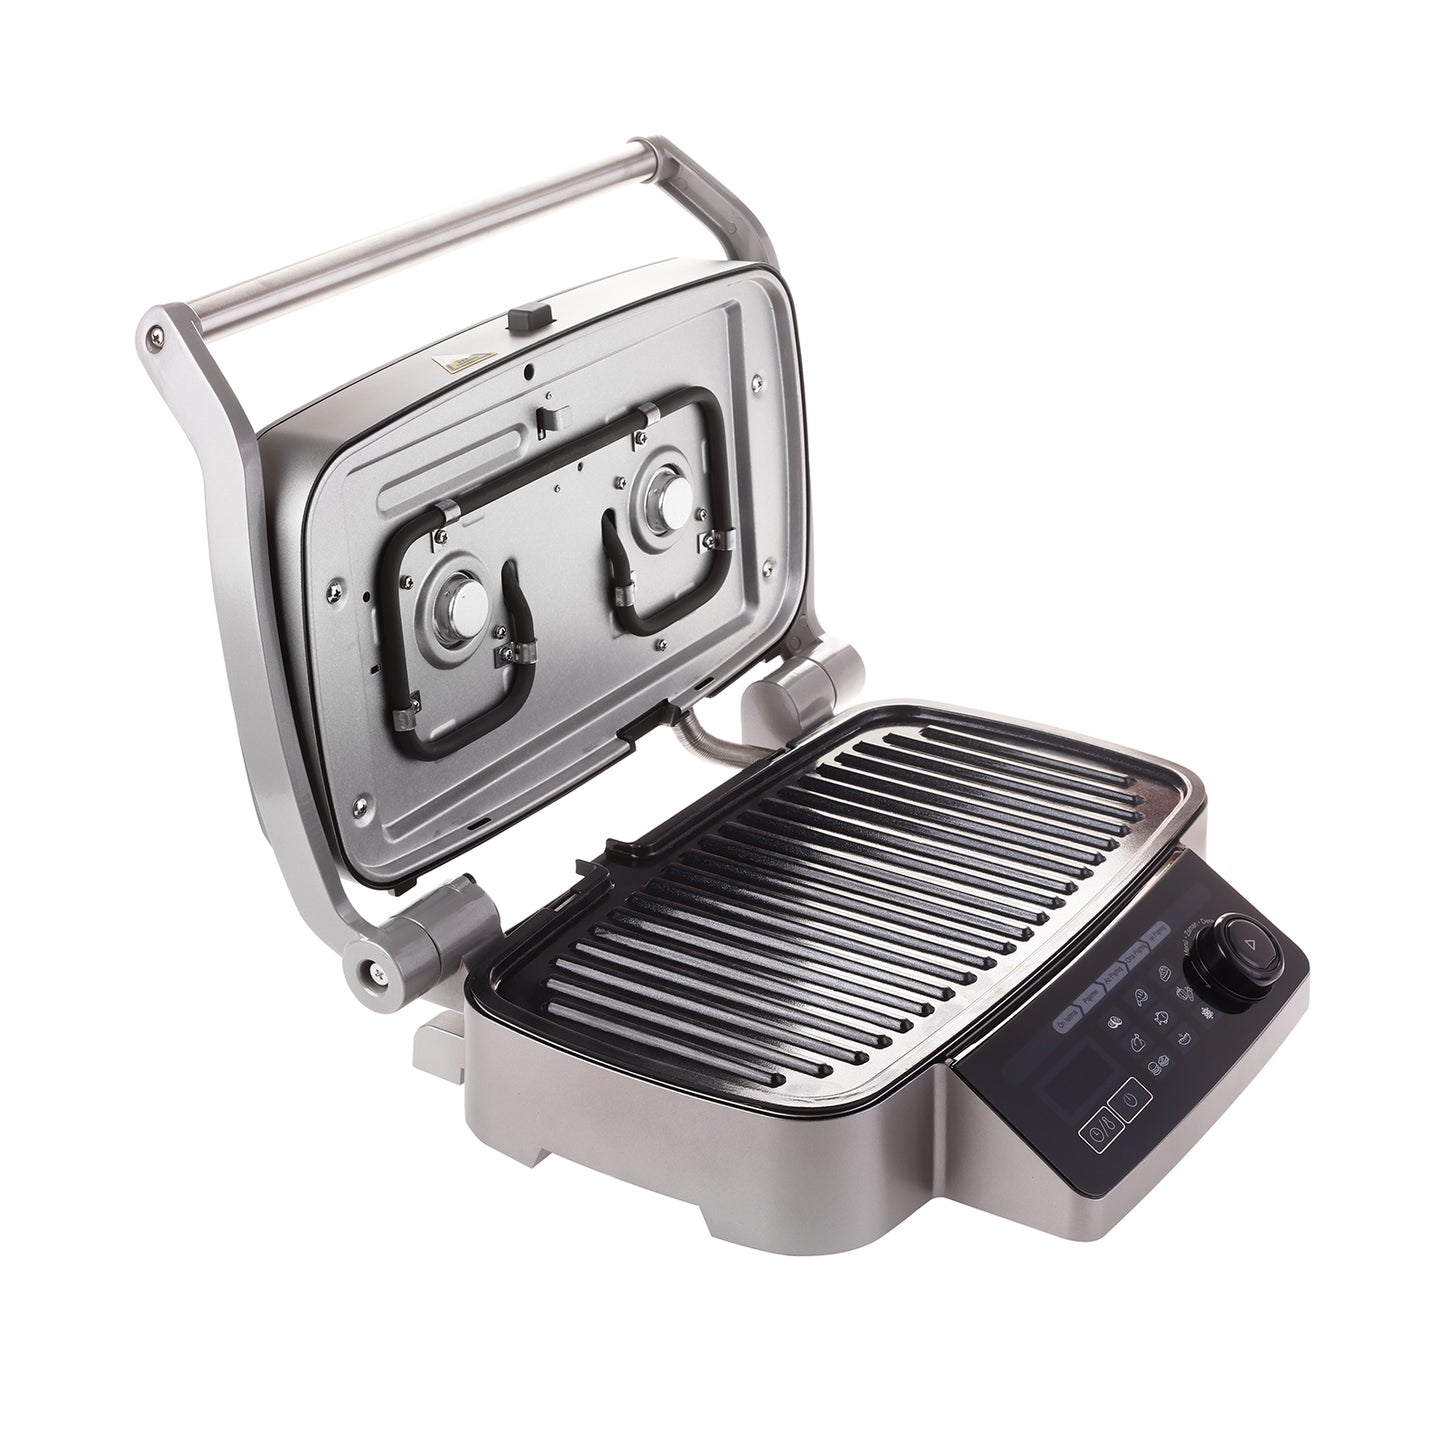 Karaca Multigrill Grill and Toaster XL